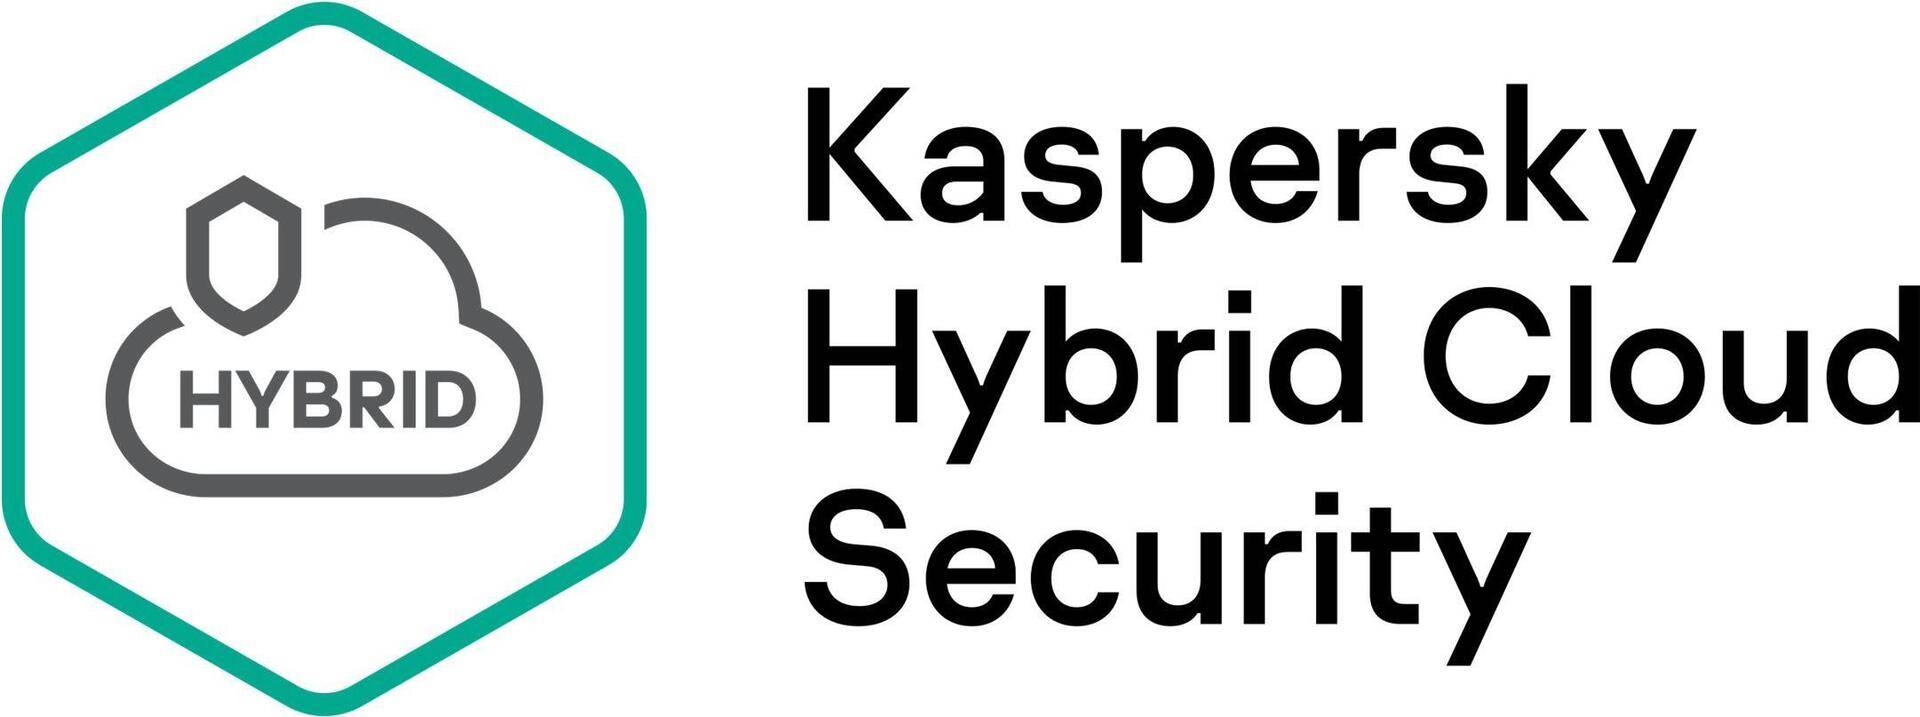 Kaspersky Hybrid Cloud Security Enterprise CPU European Edi. 50-99 CPU 1-Year Renewal License (KL4553XAQFR) von Kaspersky Lab